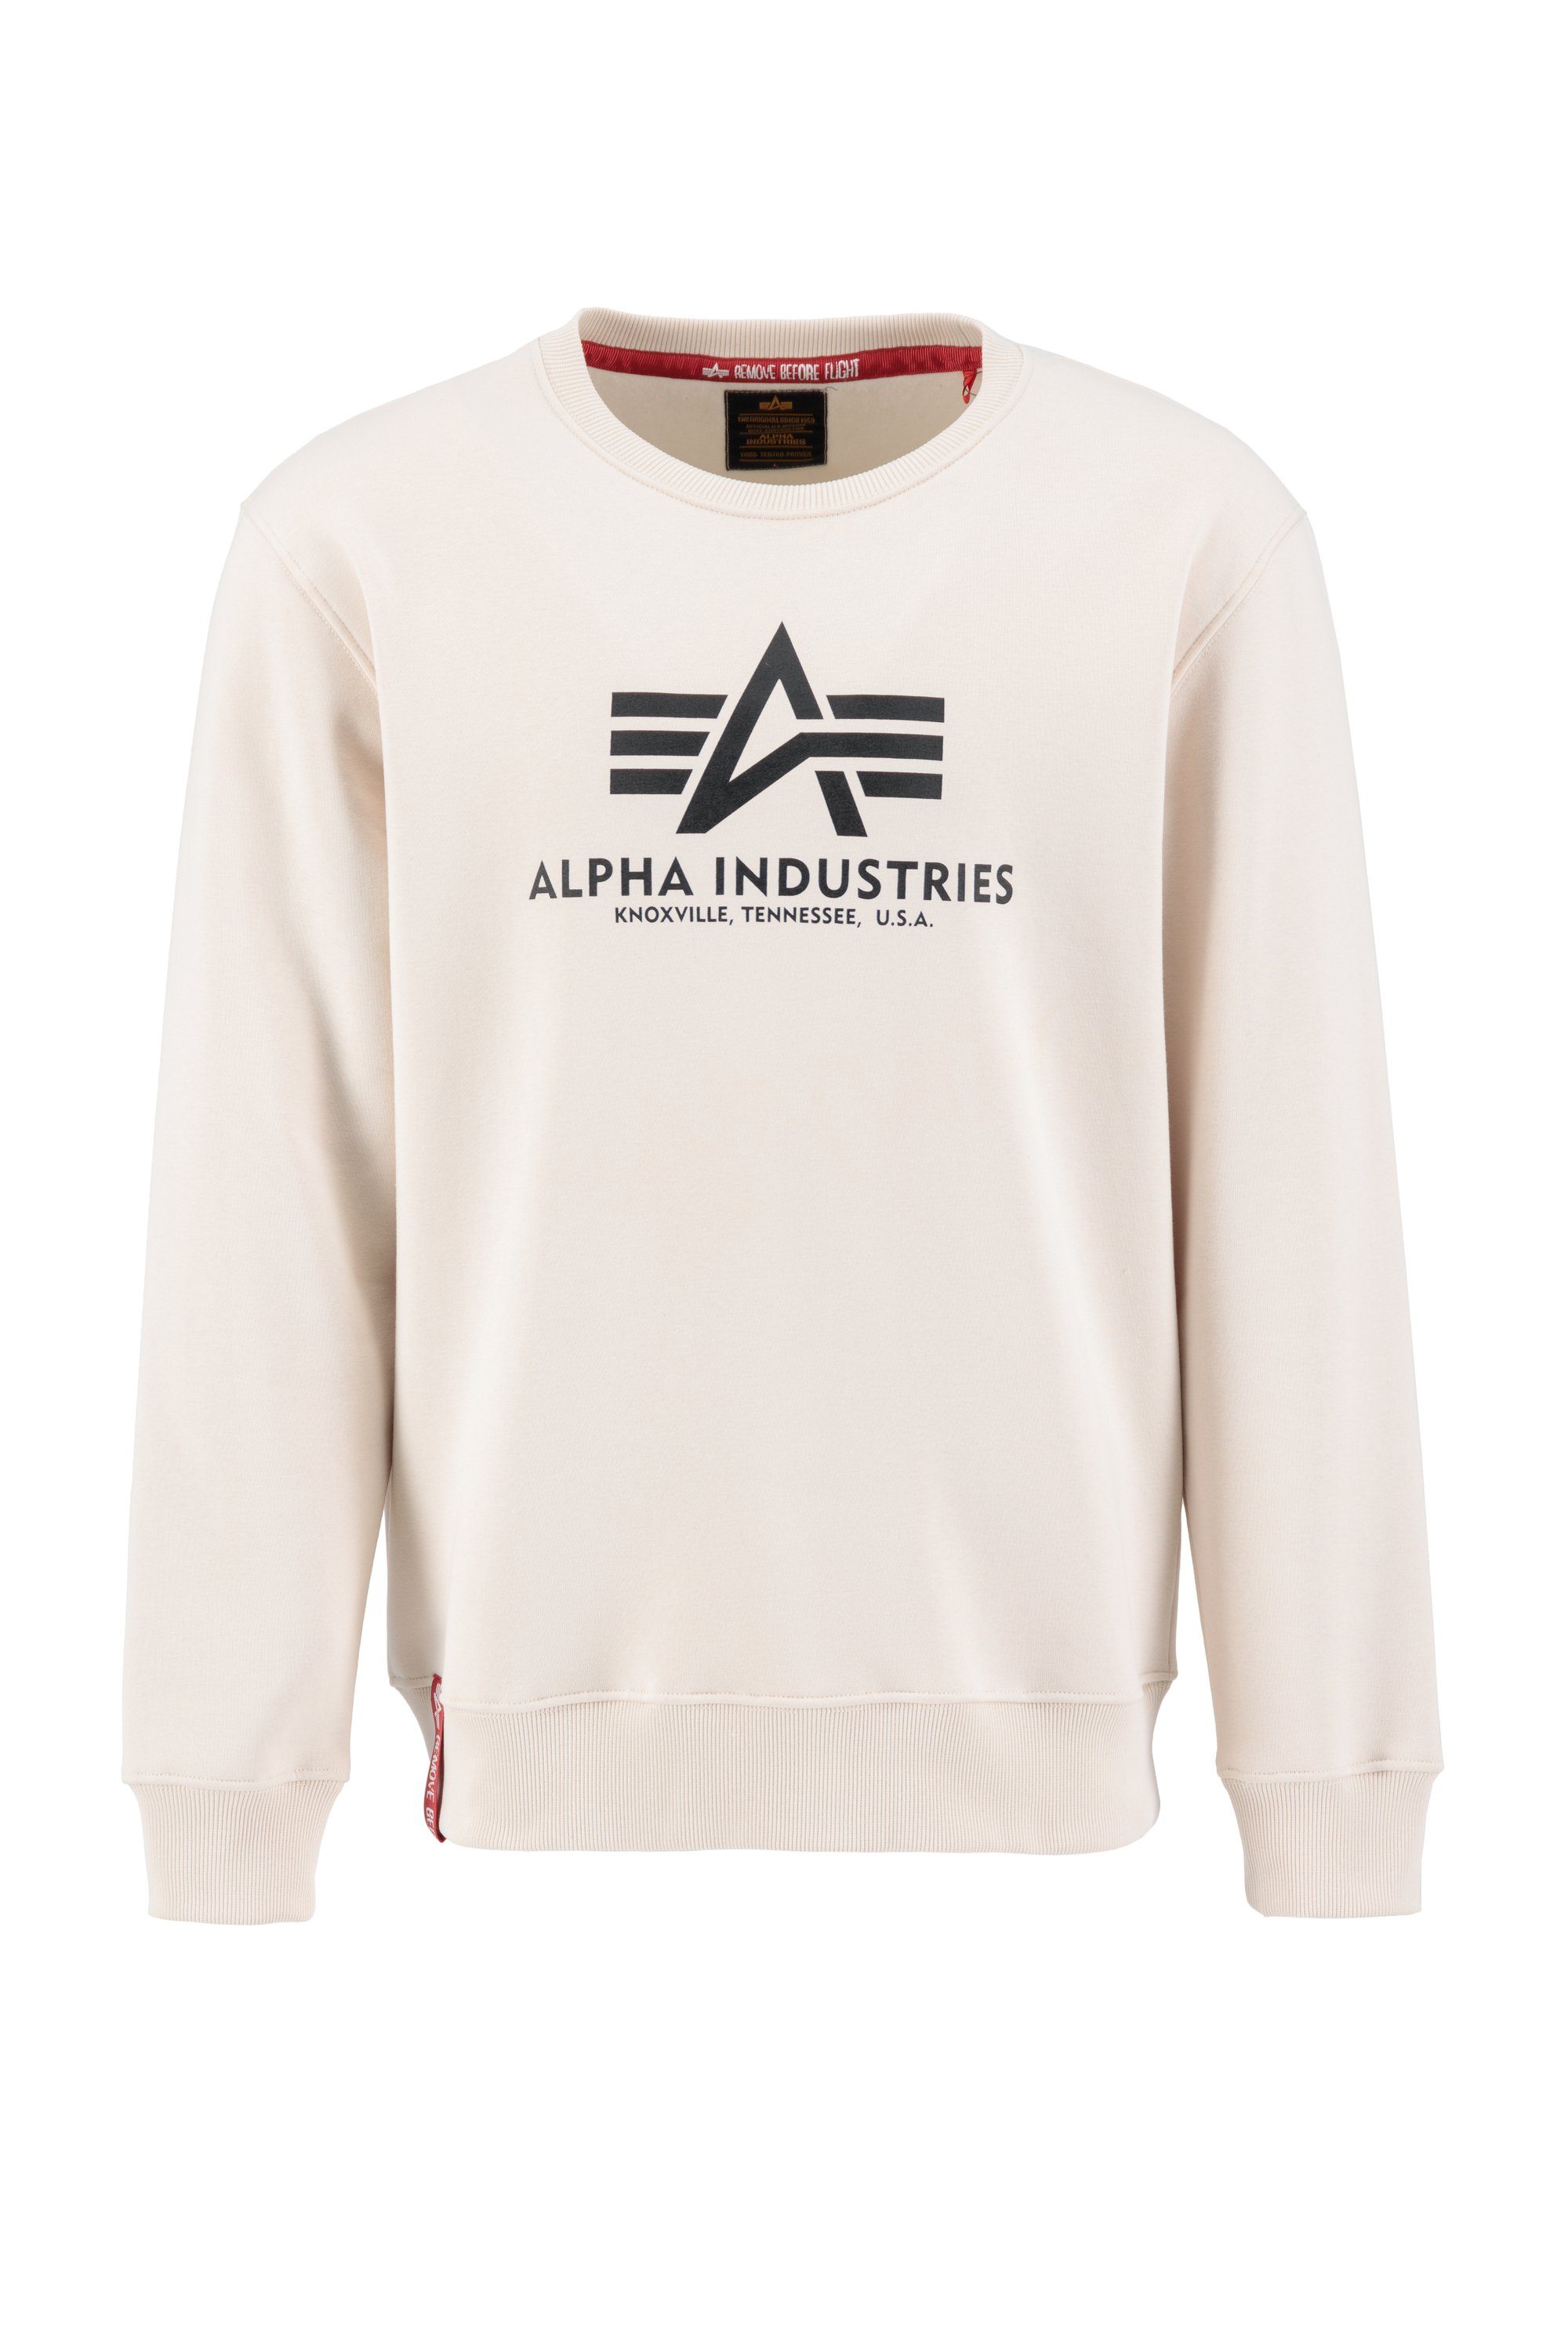 - stream Industries jet white Sweater Industries Alpha Basic Sweater Alpha Sweatshirts Men